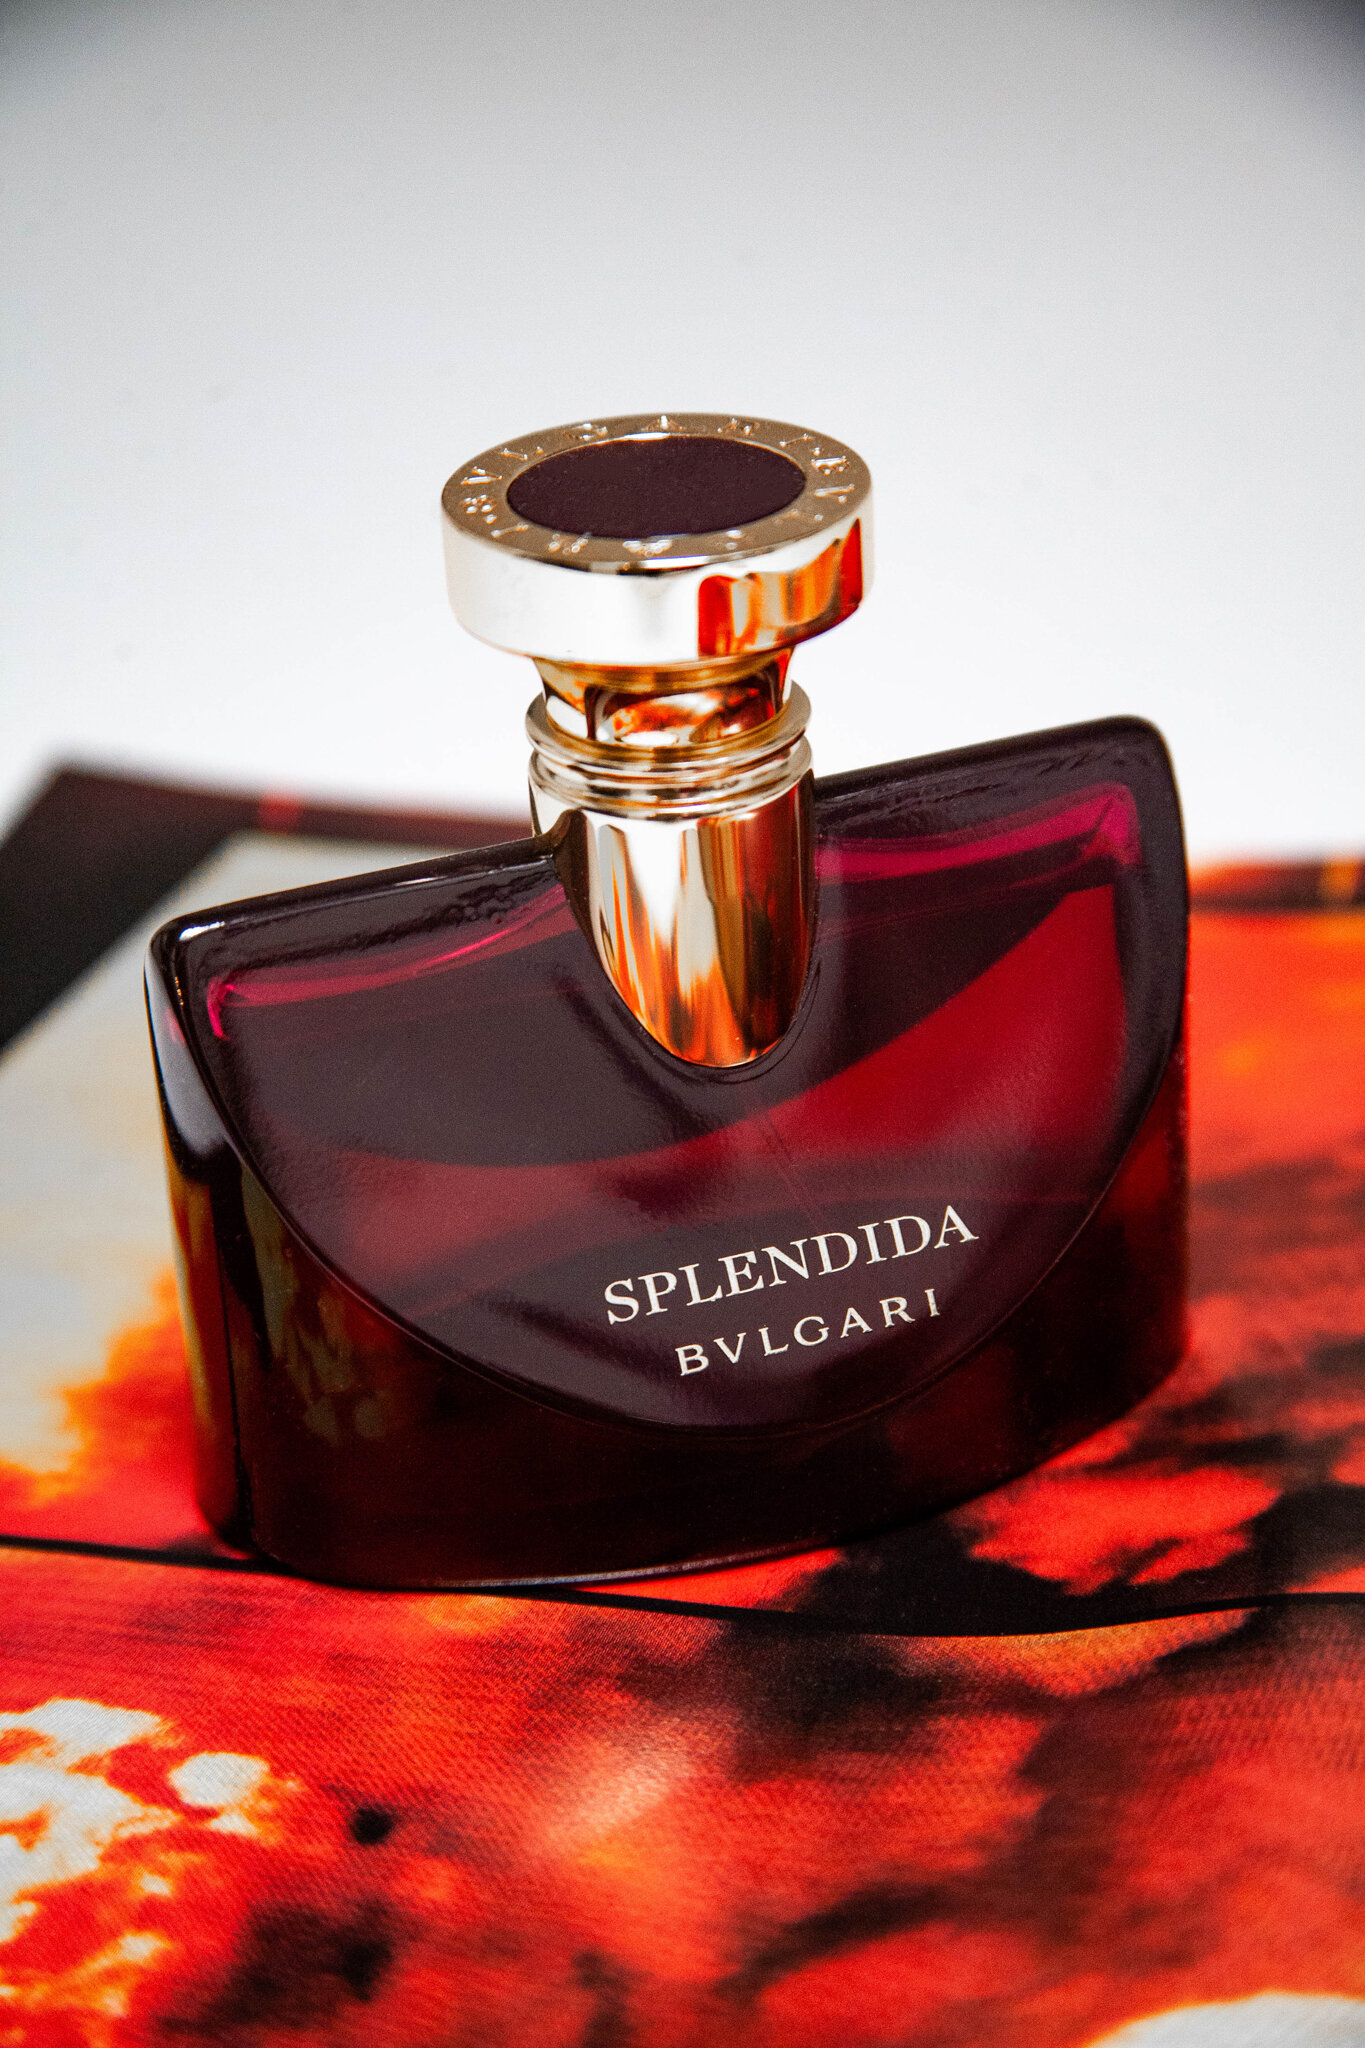 Bvlgari Splendida fragrance